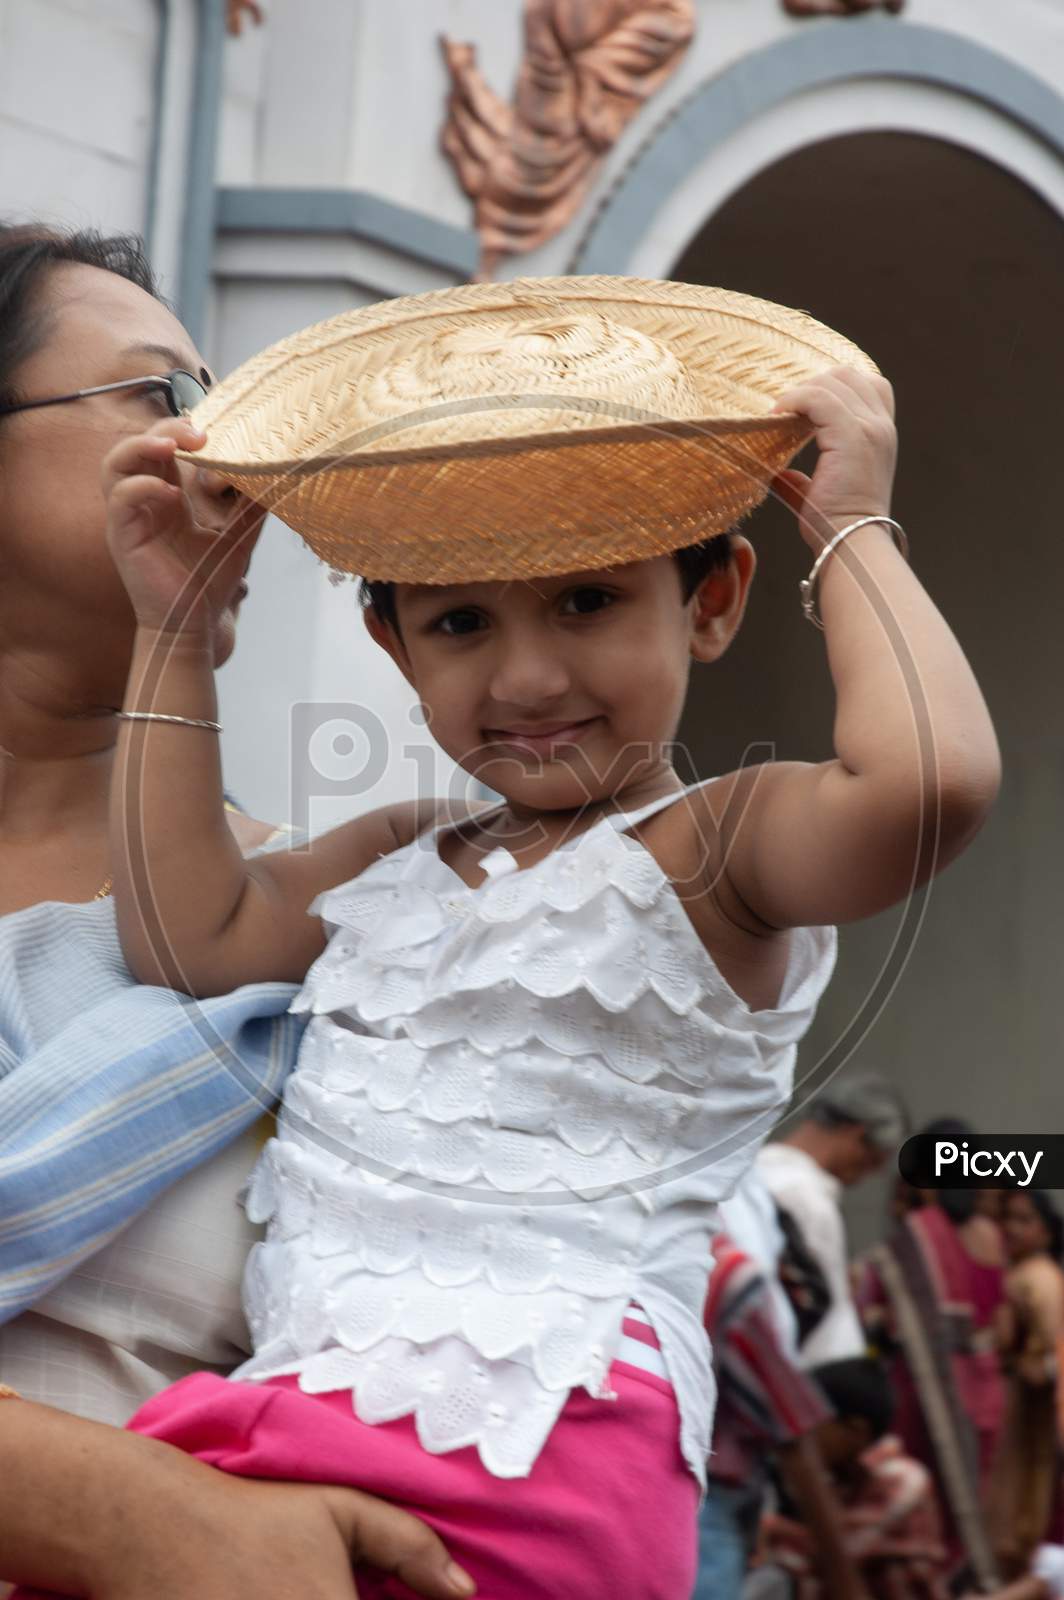 Indian Little girl holding a basket